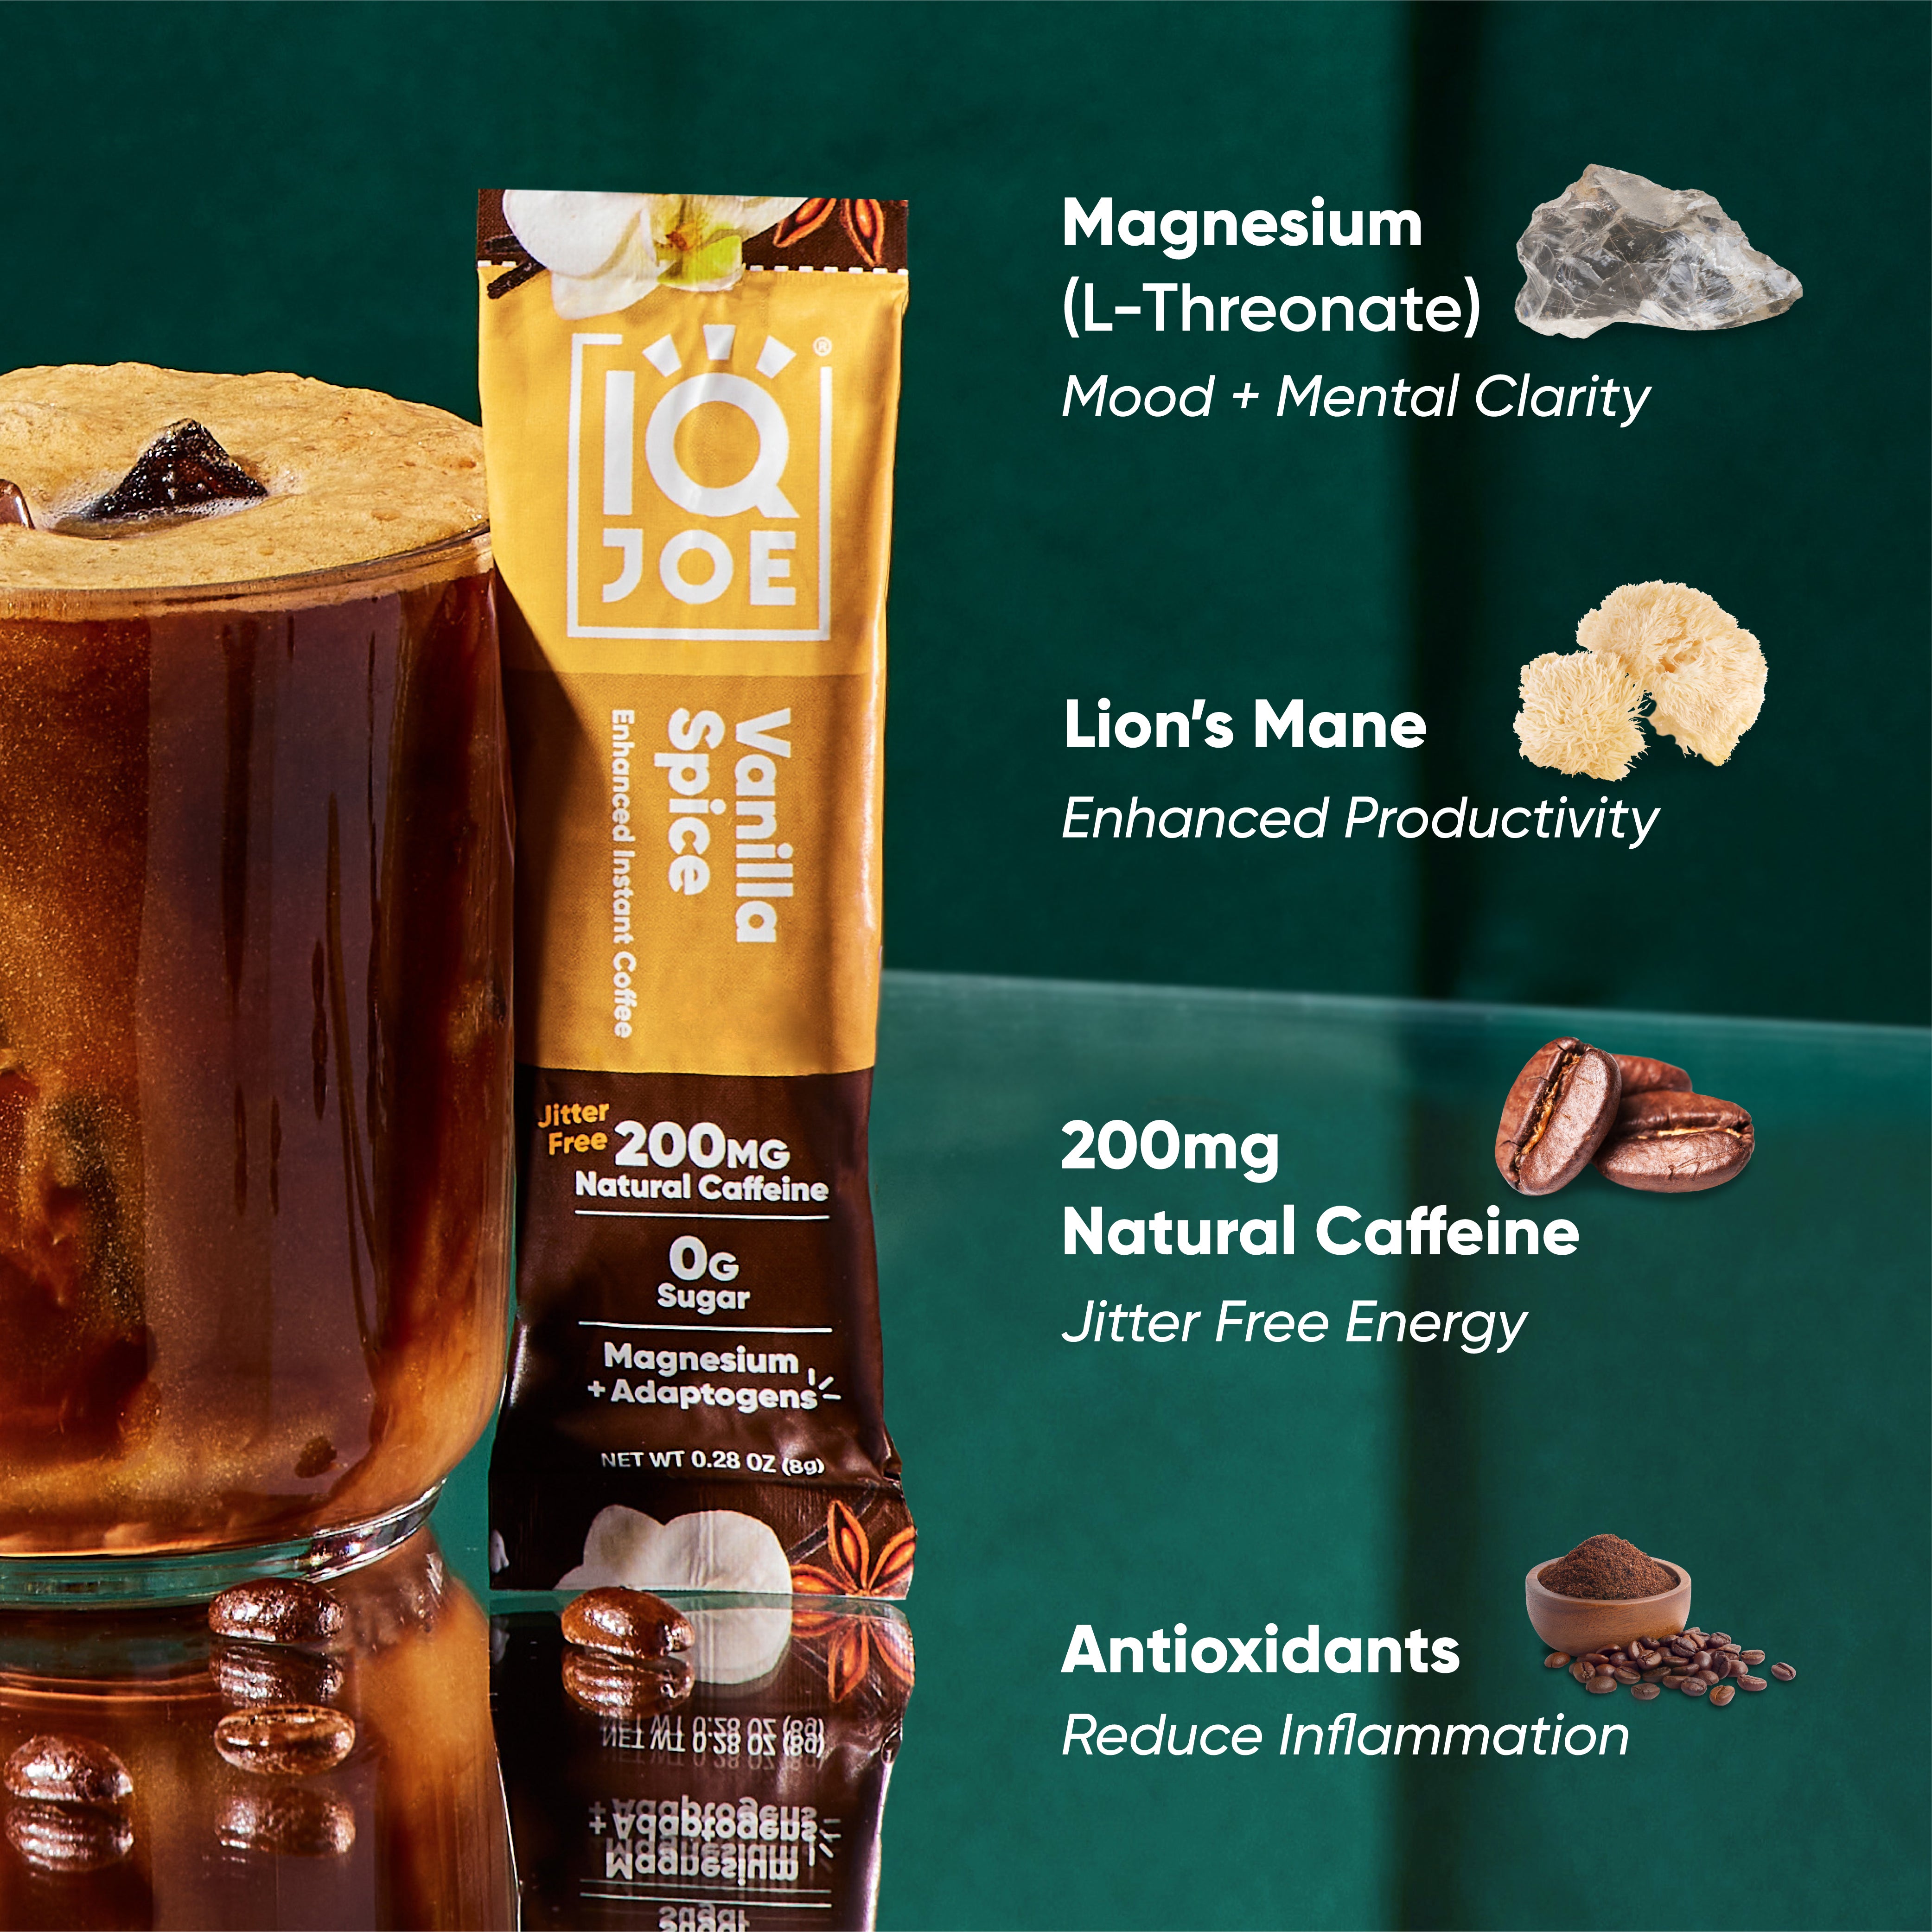 IQJOE Vanilla Spice Nootropic Coffee with Magnesium L-Threonate, Lion's Mane Mushroom, 200mg of Natural Caffeine, Antioxidants.